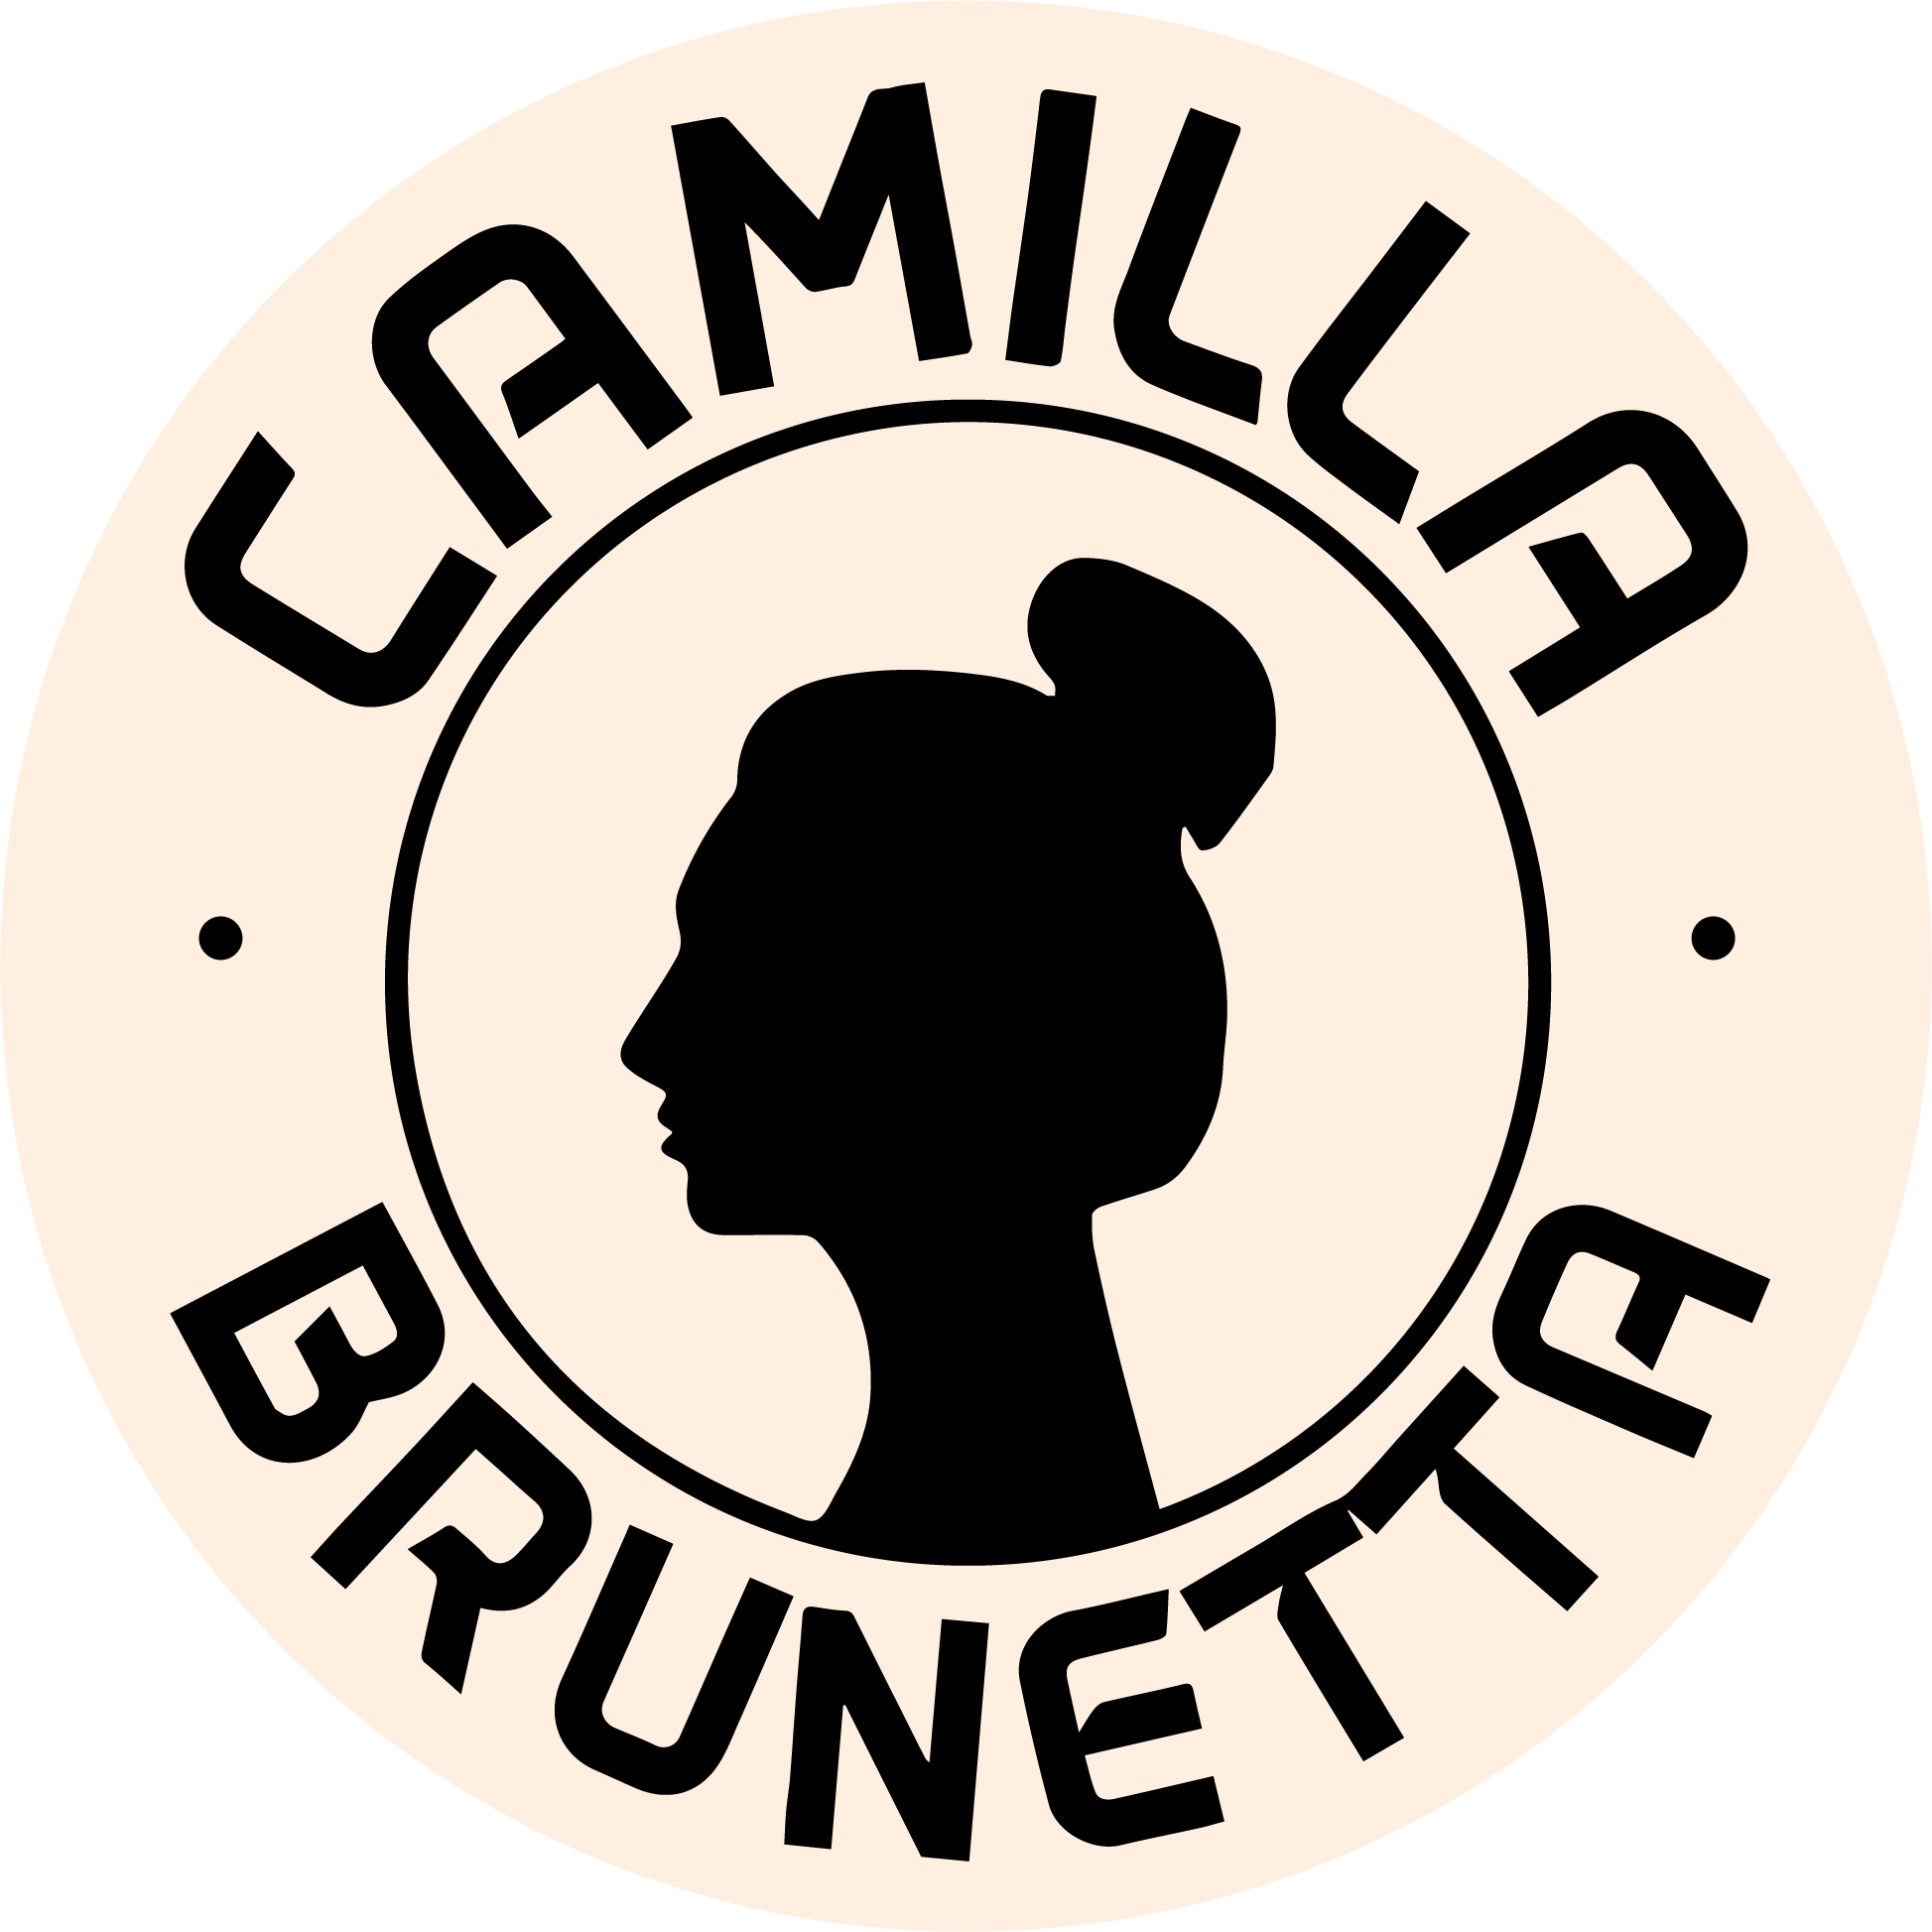 Camilla Brunetta